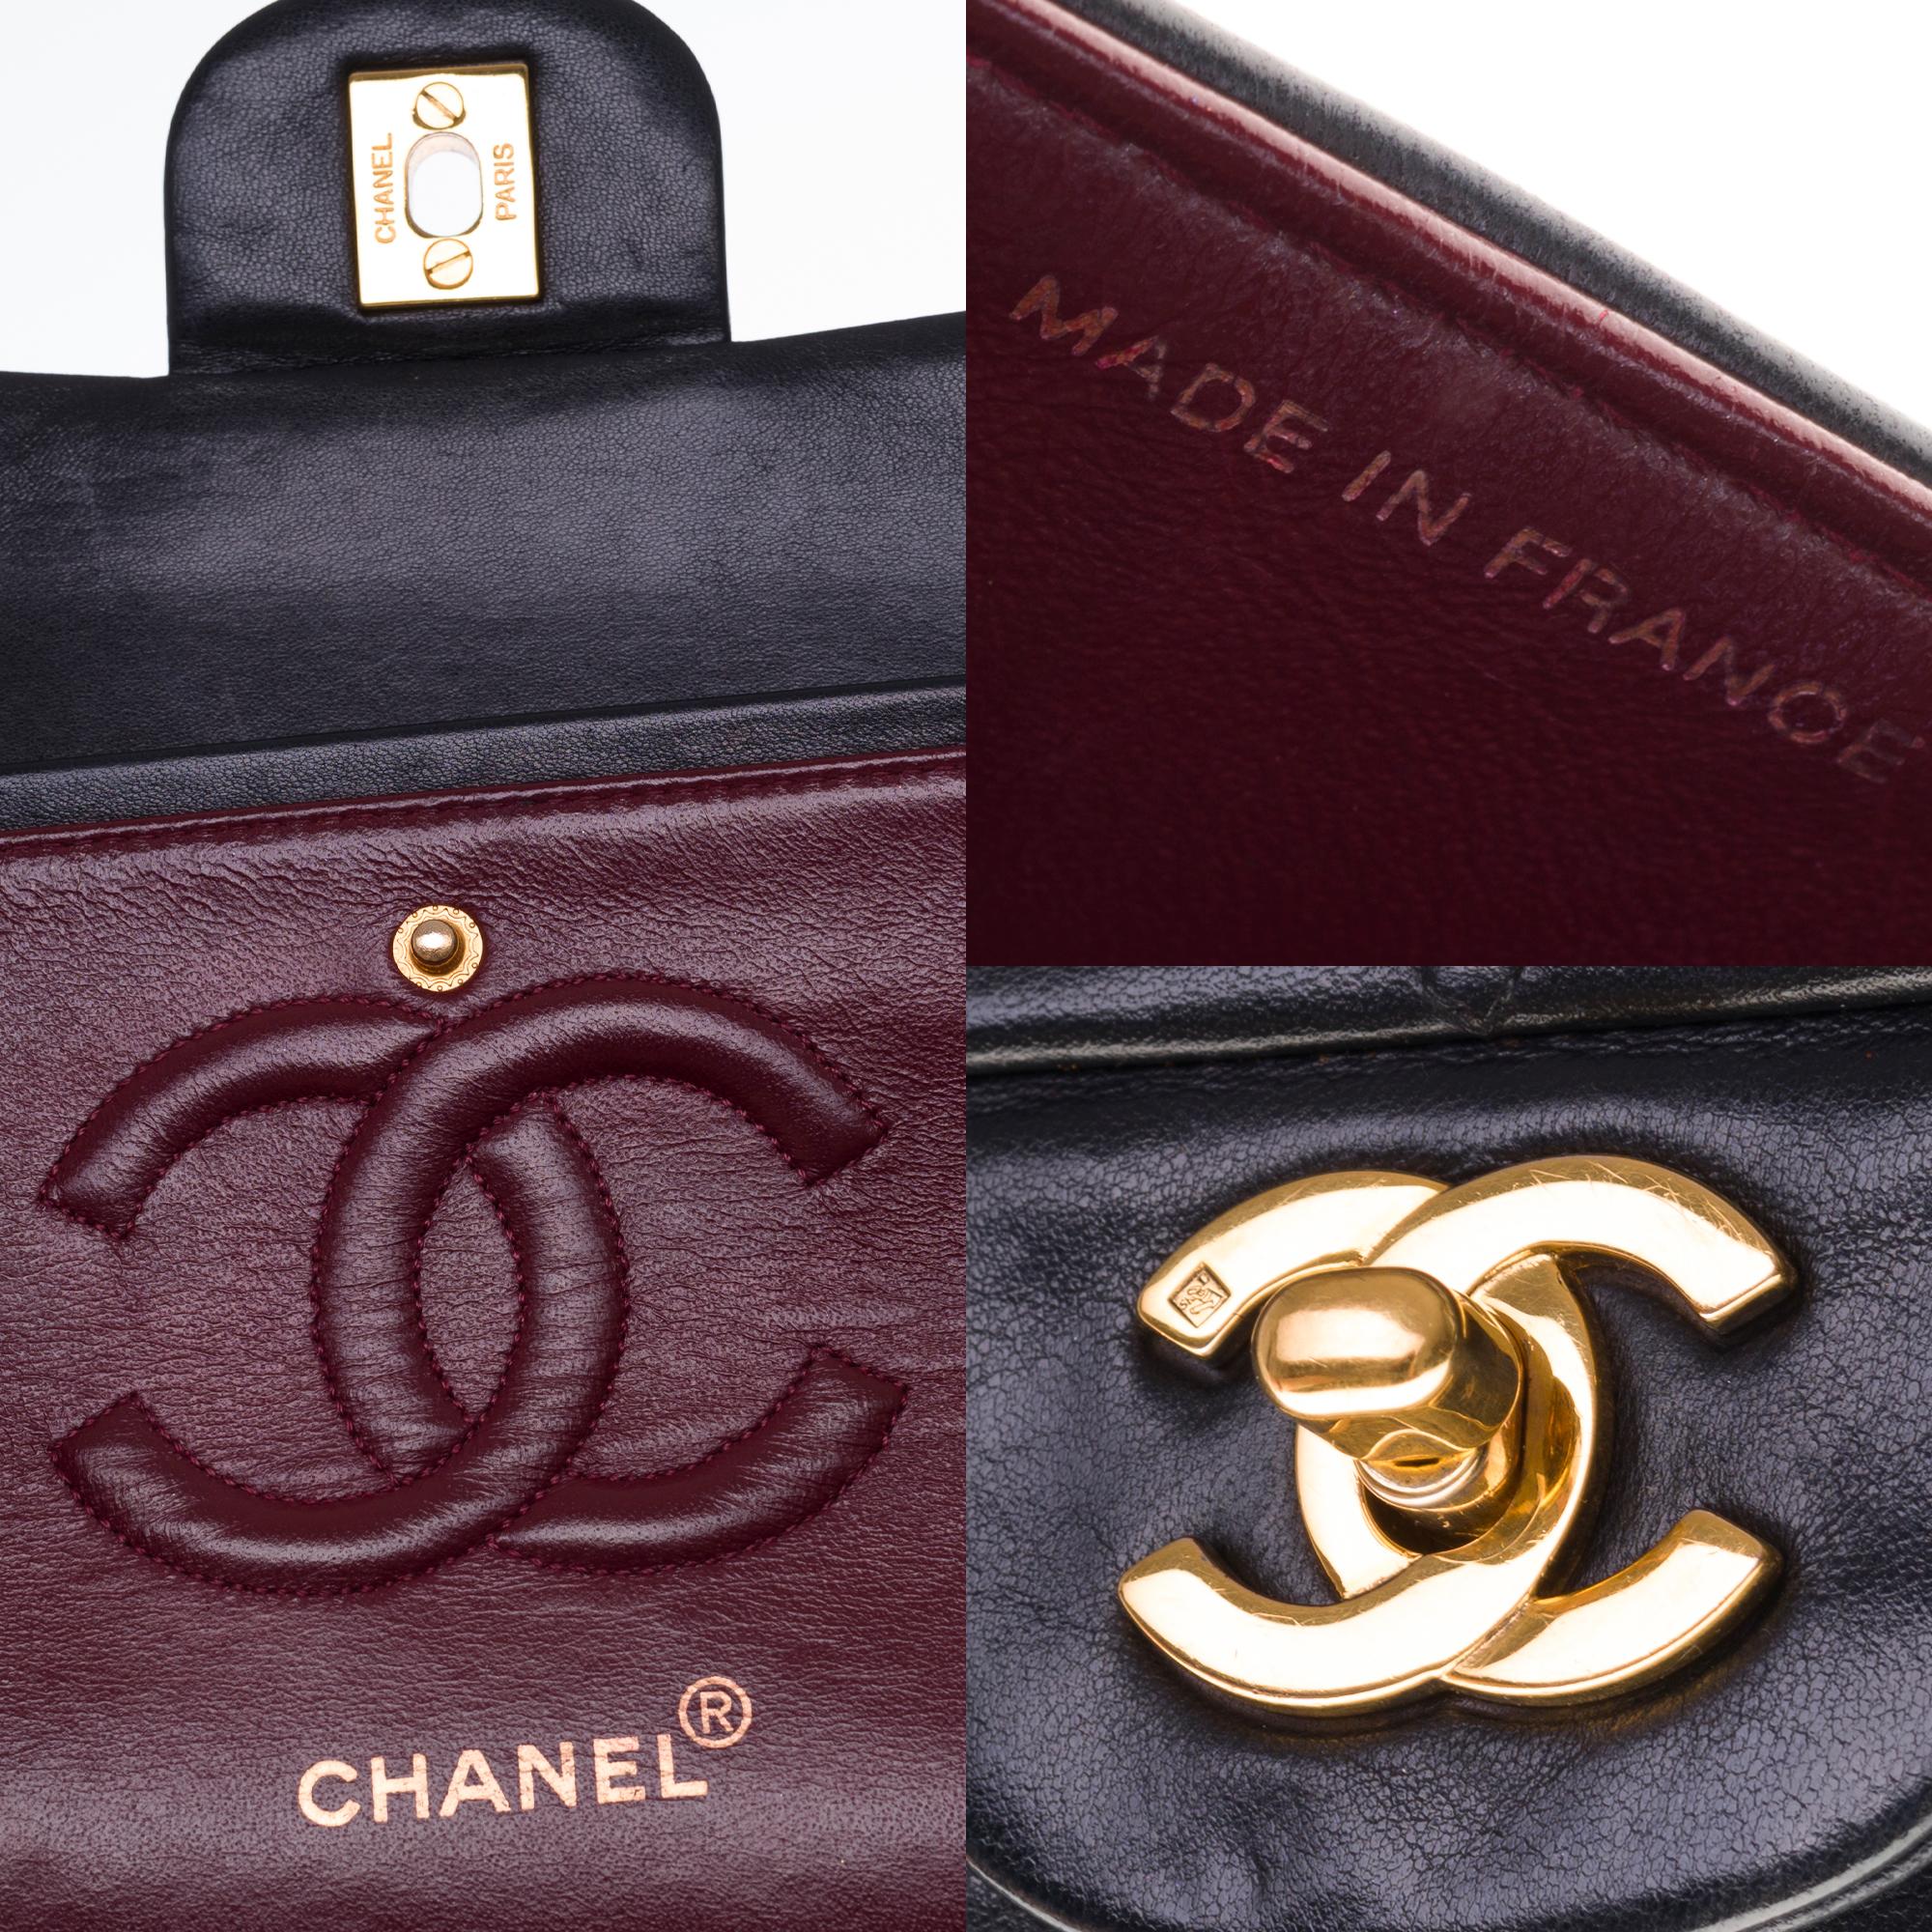 Black Chanel Timeless Medium Shoulder bag in black quilted leather and gold hardware